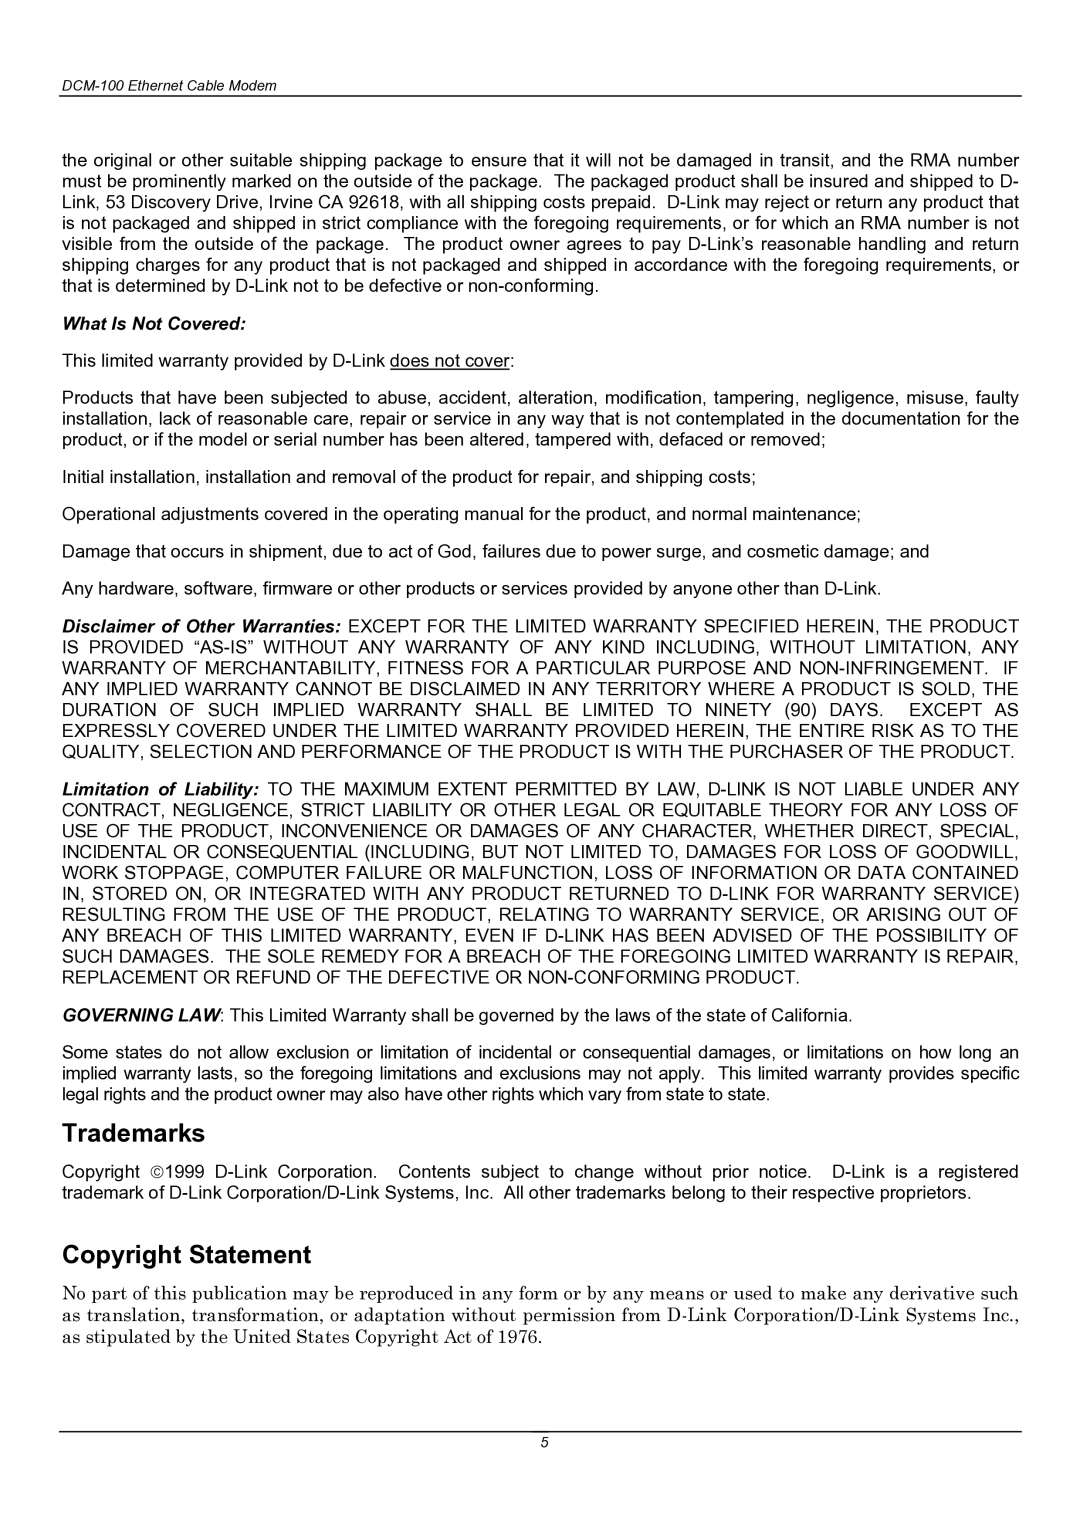 D-Link DCM-100 user manual Trademarks, Copyright Statement 